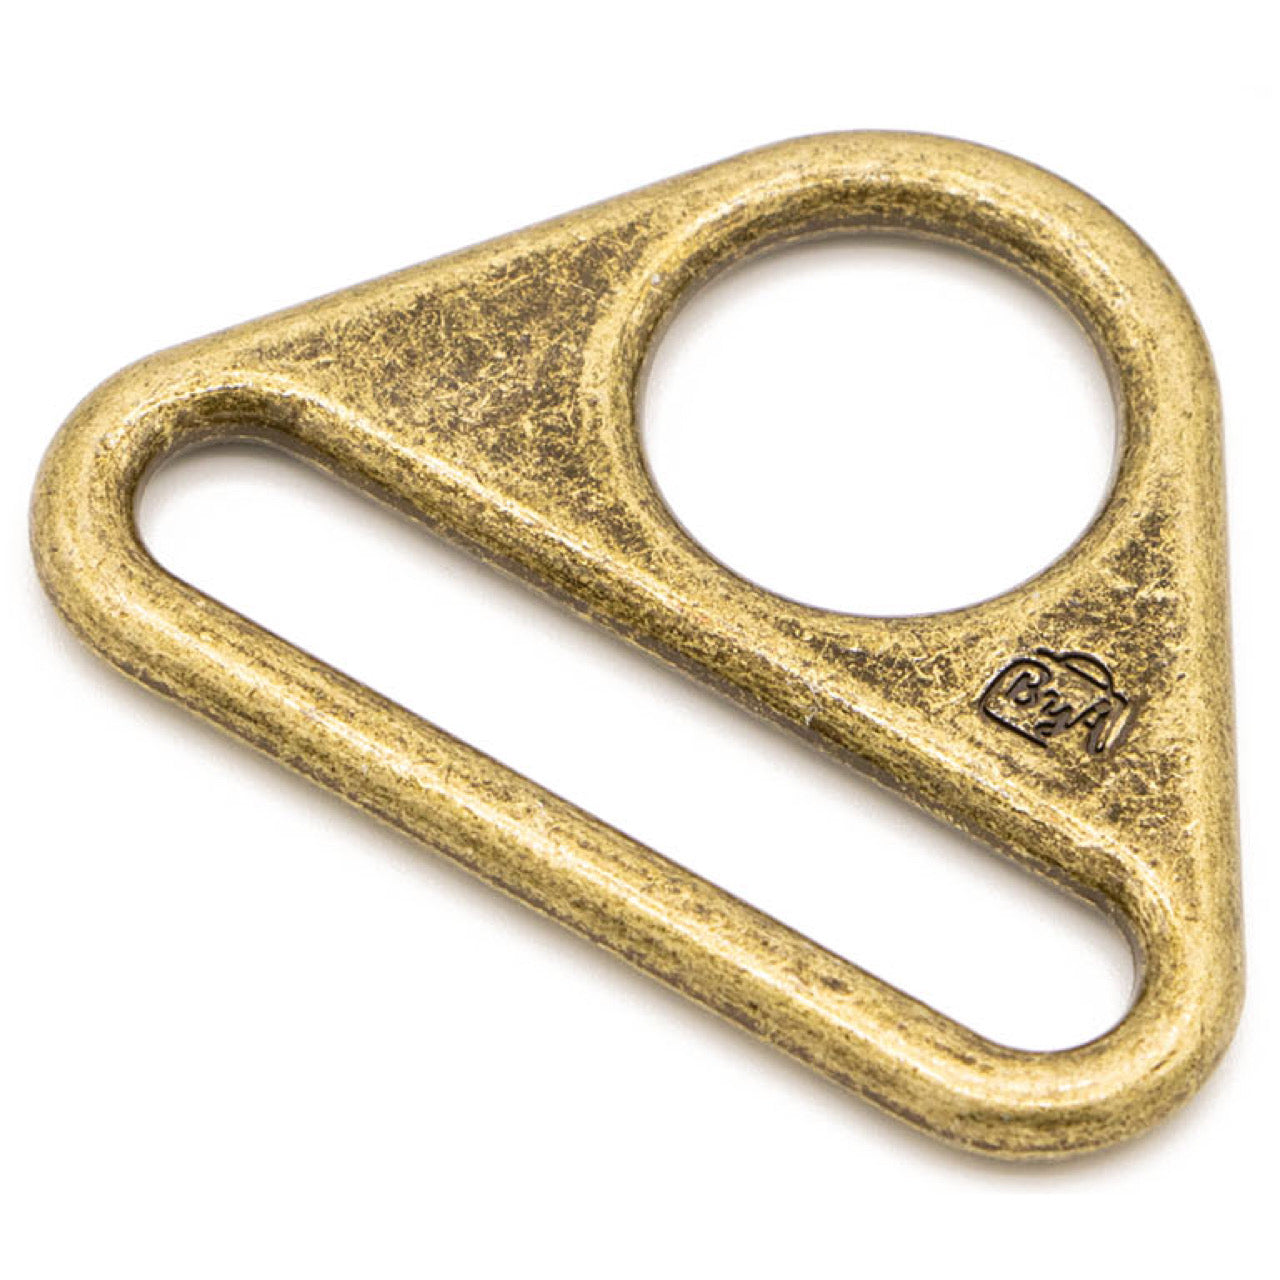 ByAnnie Hardware - 1.5” Triangle Ring - Set of 2 - Brass